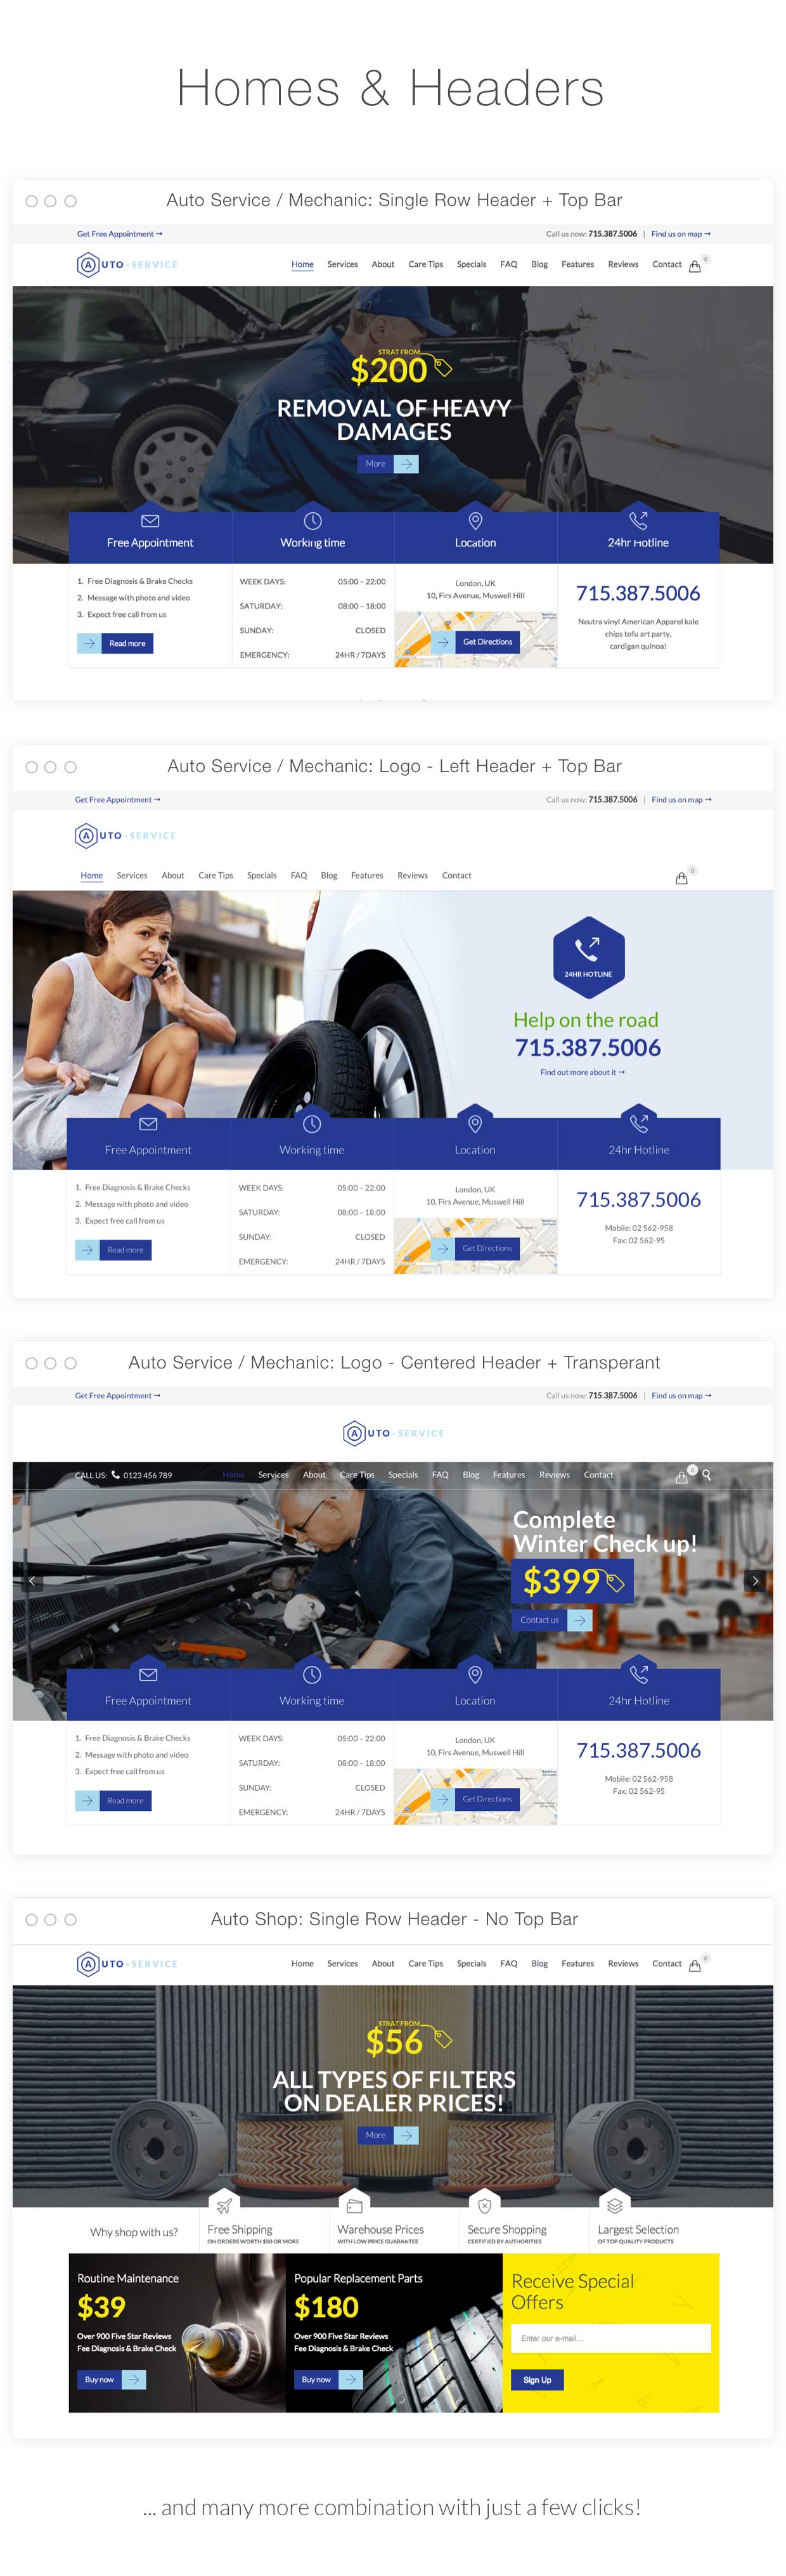 auto Introduction homes - Auto Repair - Car Mechanic Services